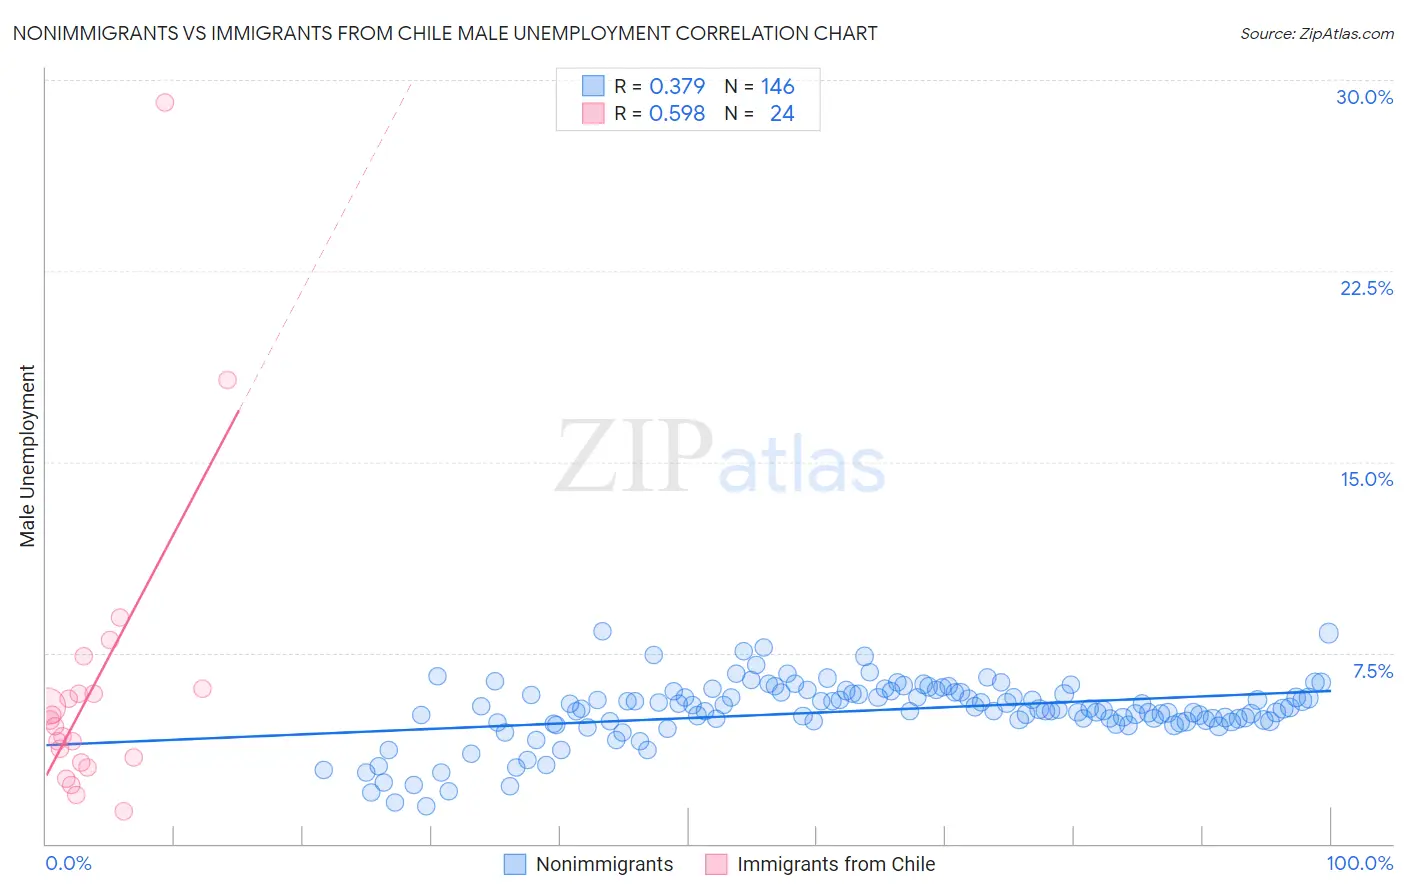 Nonimmigrants vs Immigrants from Chile Male Unemployment